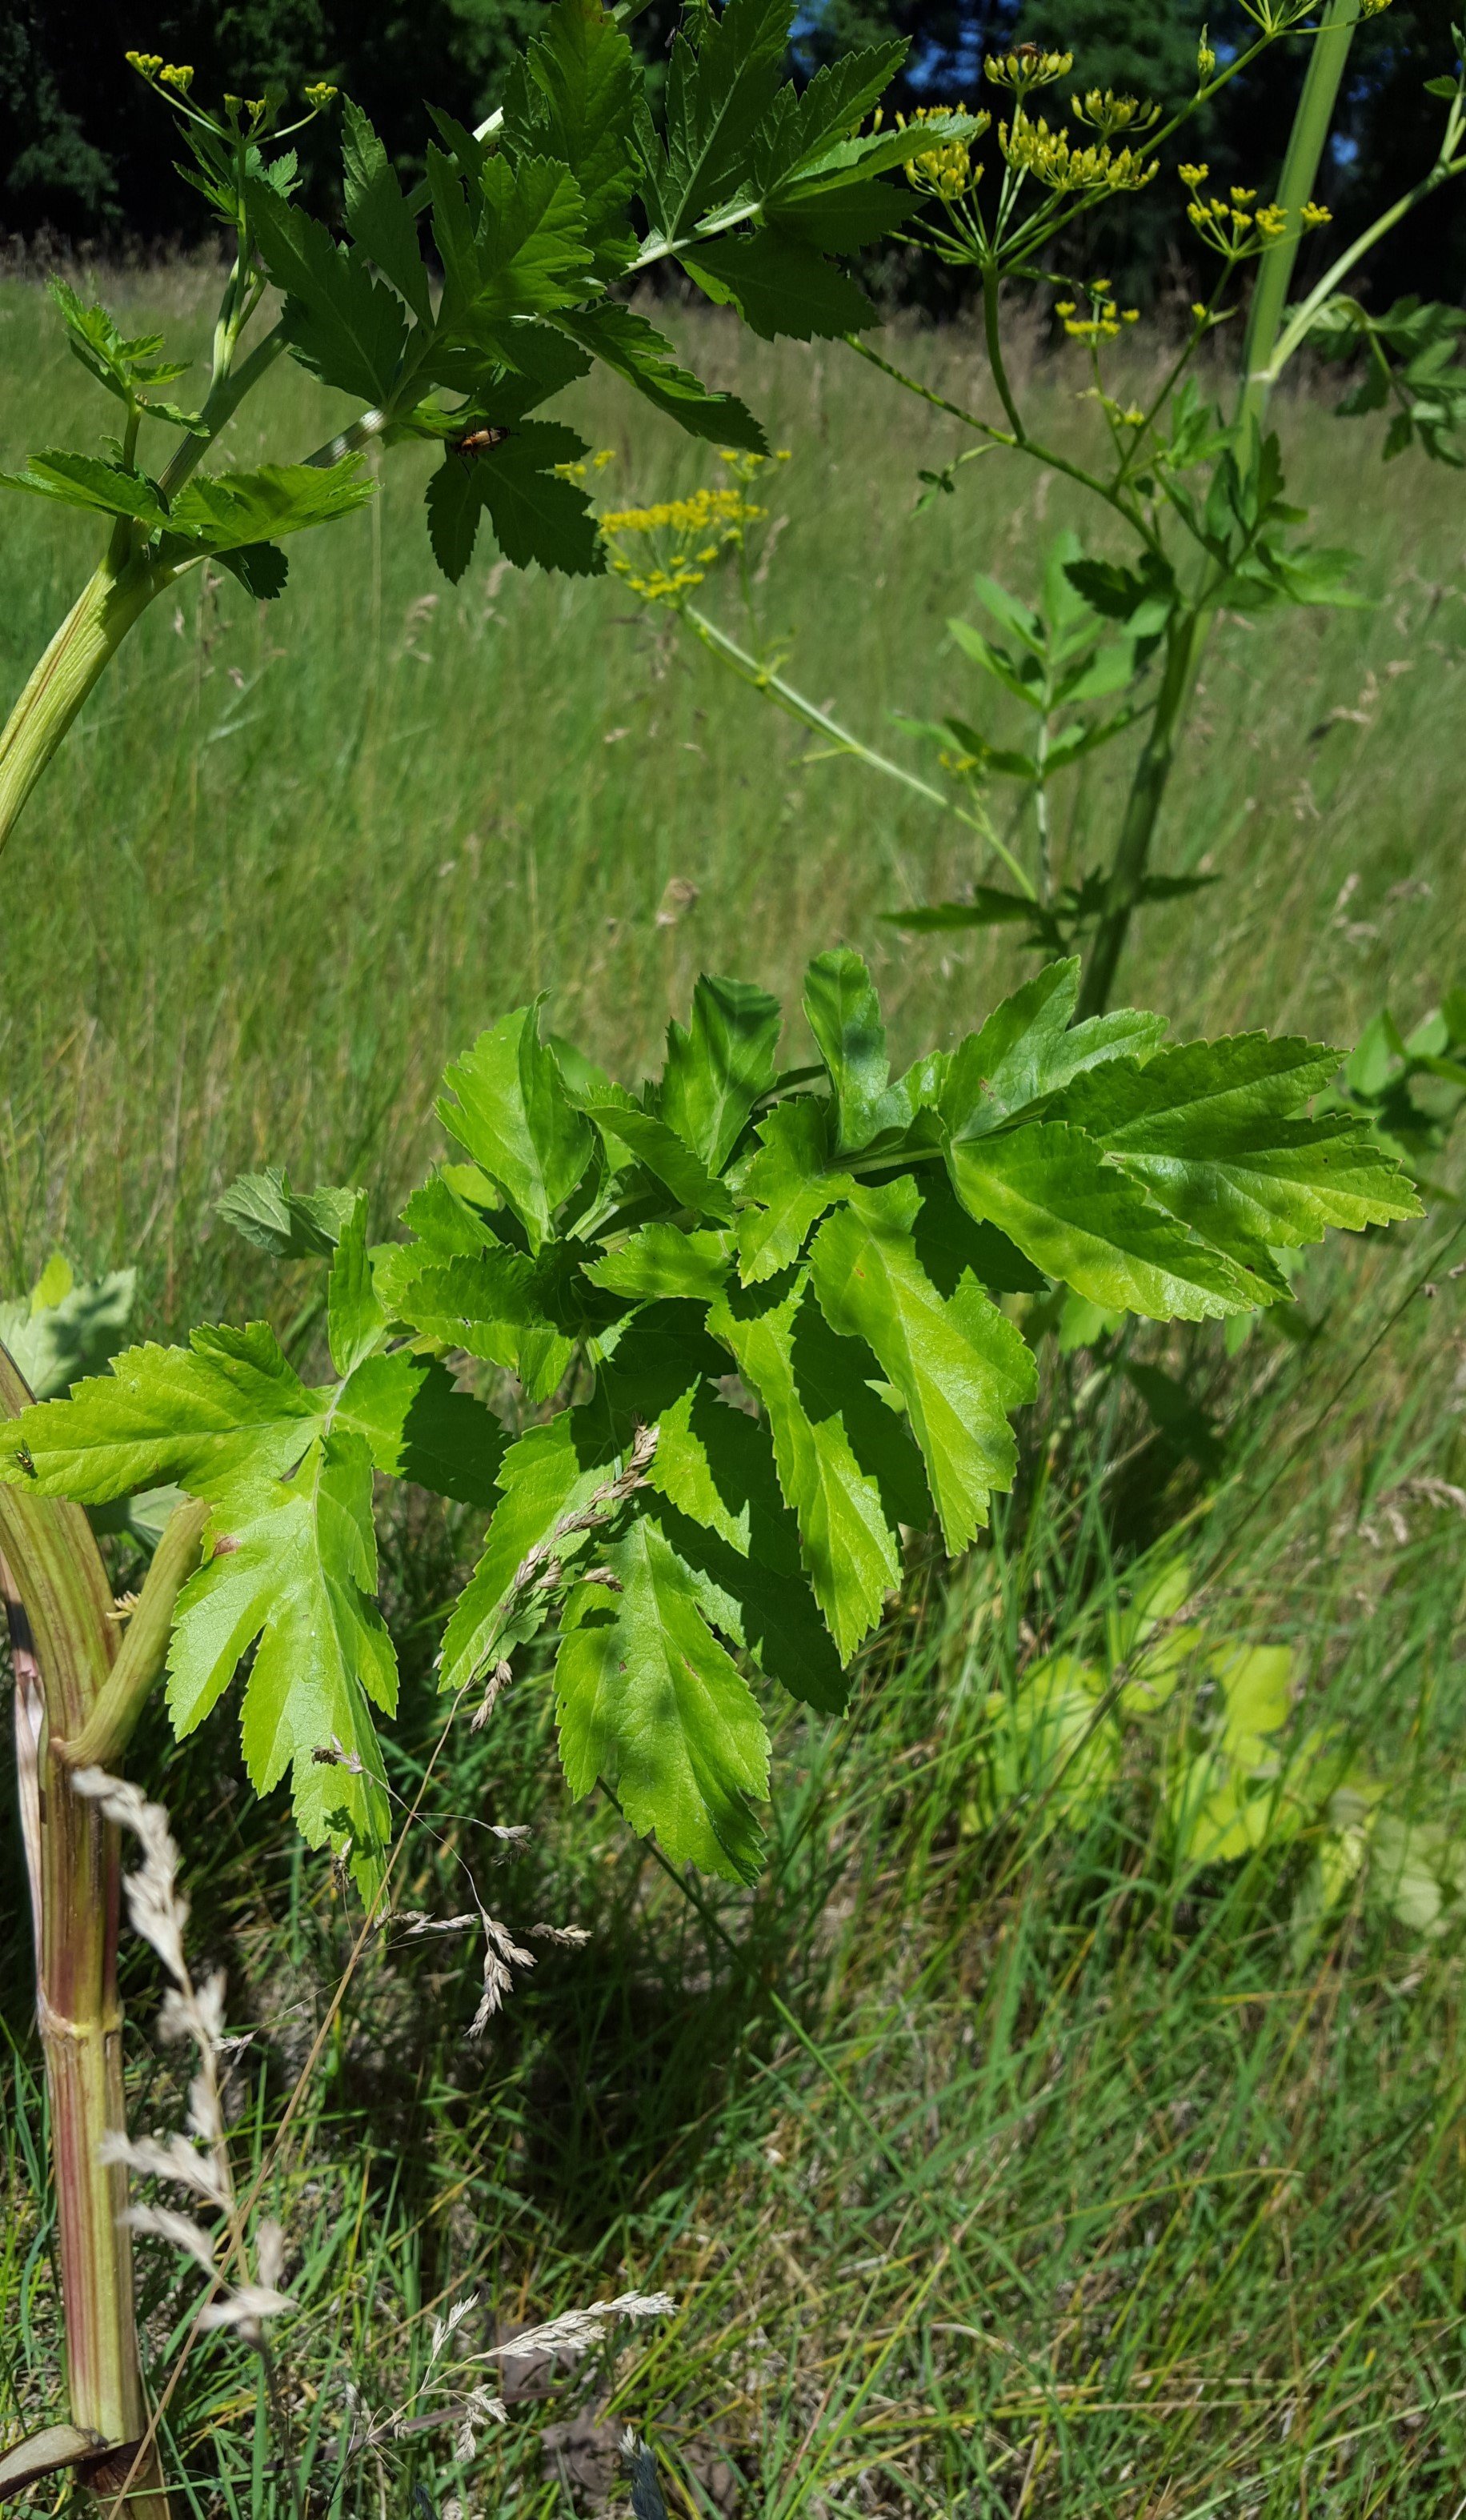 Wild parsnip mature leaf and stem